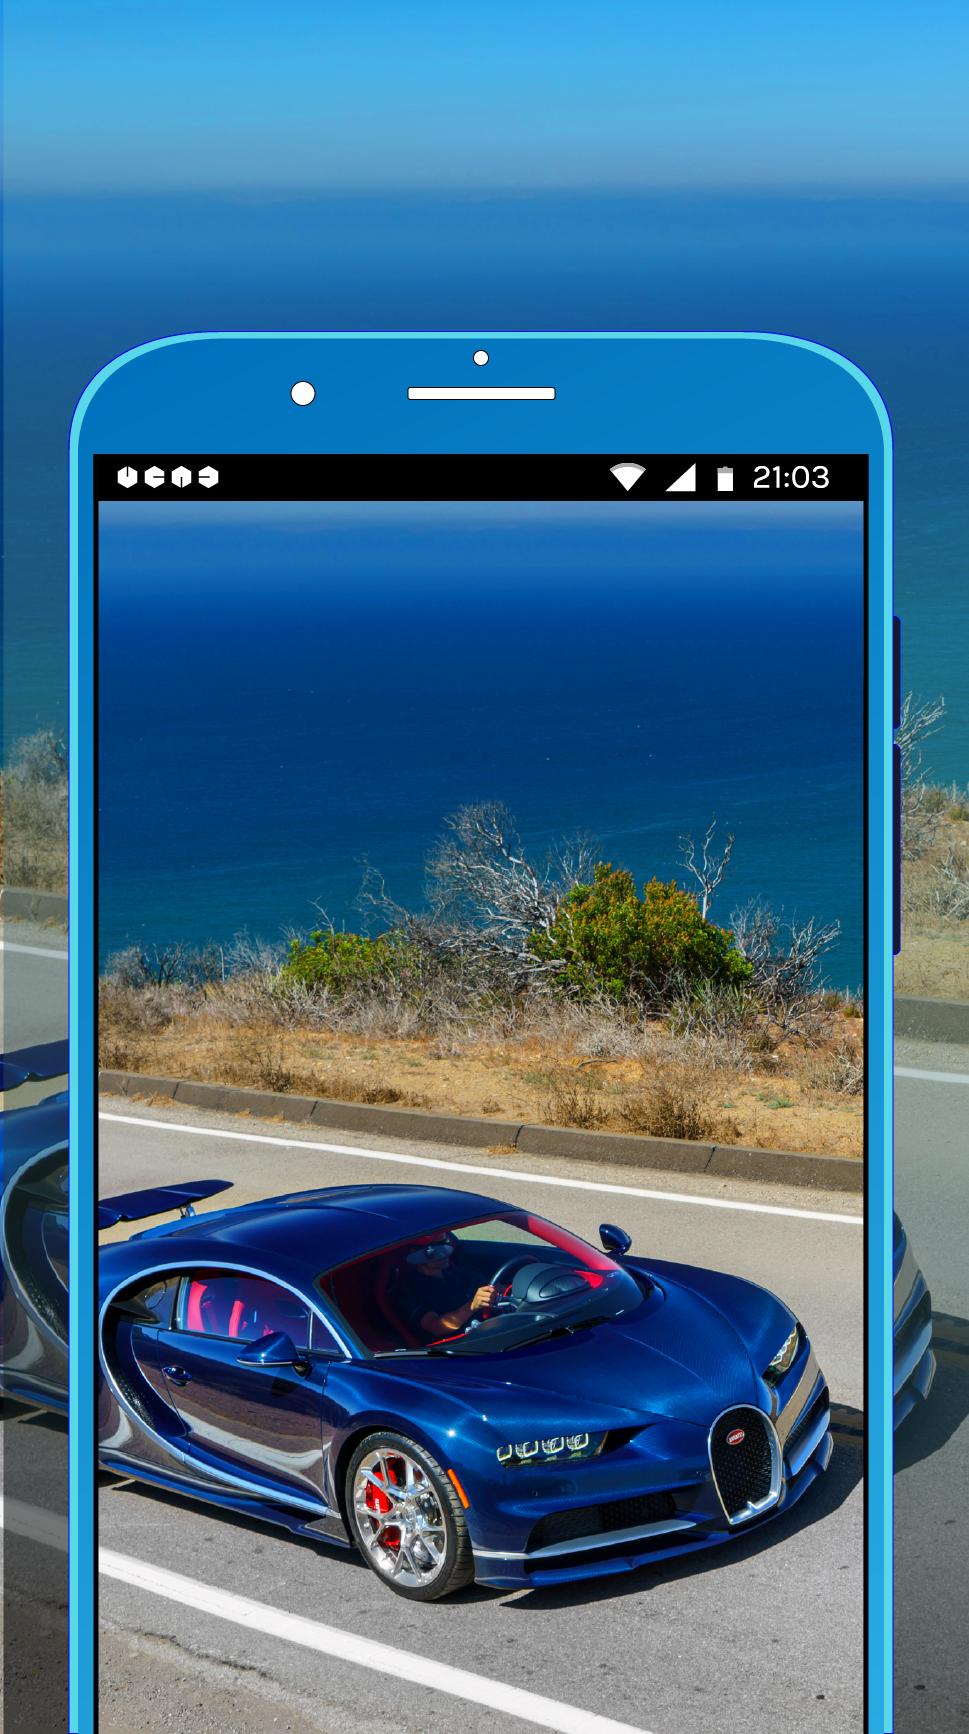 Bugatti Chiron Hd Wallpapers For Mobile